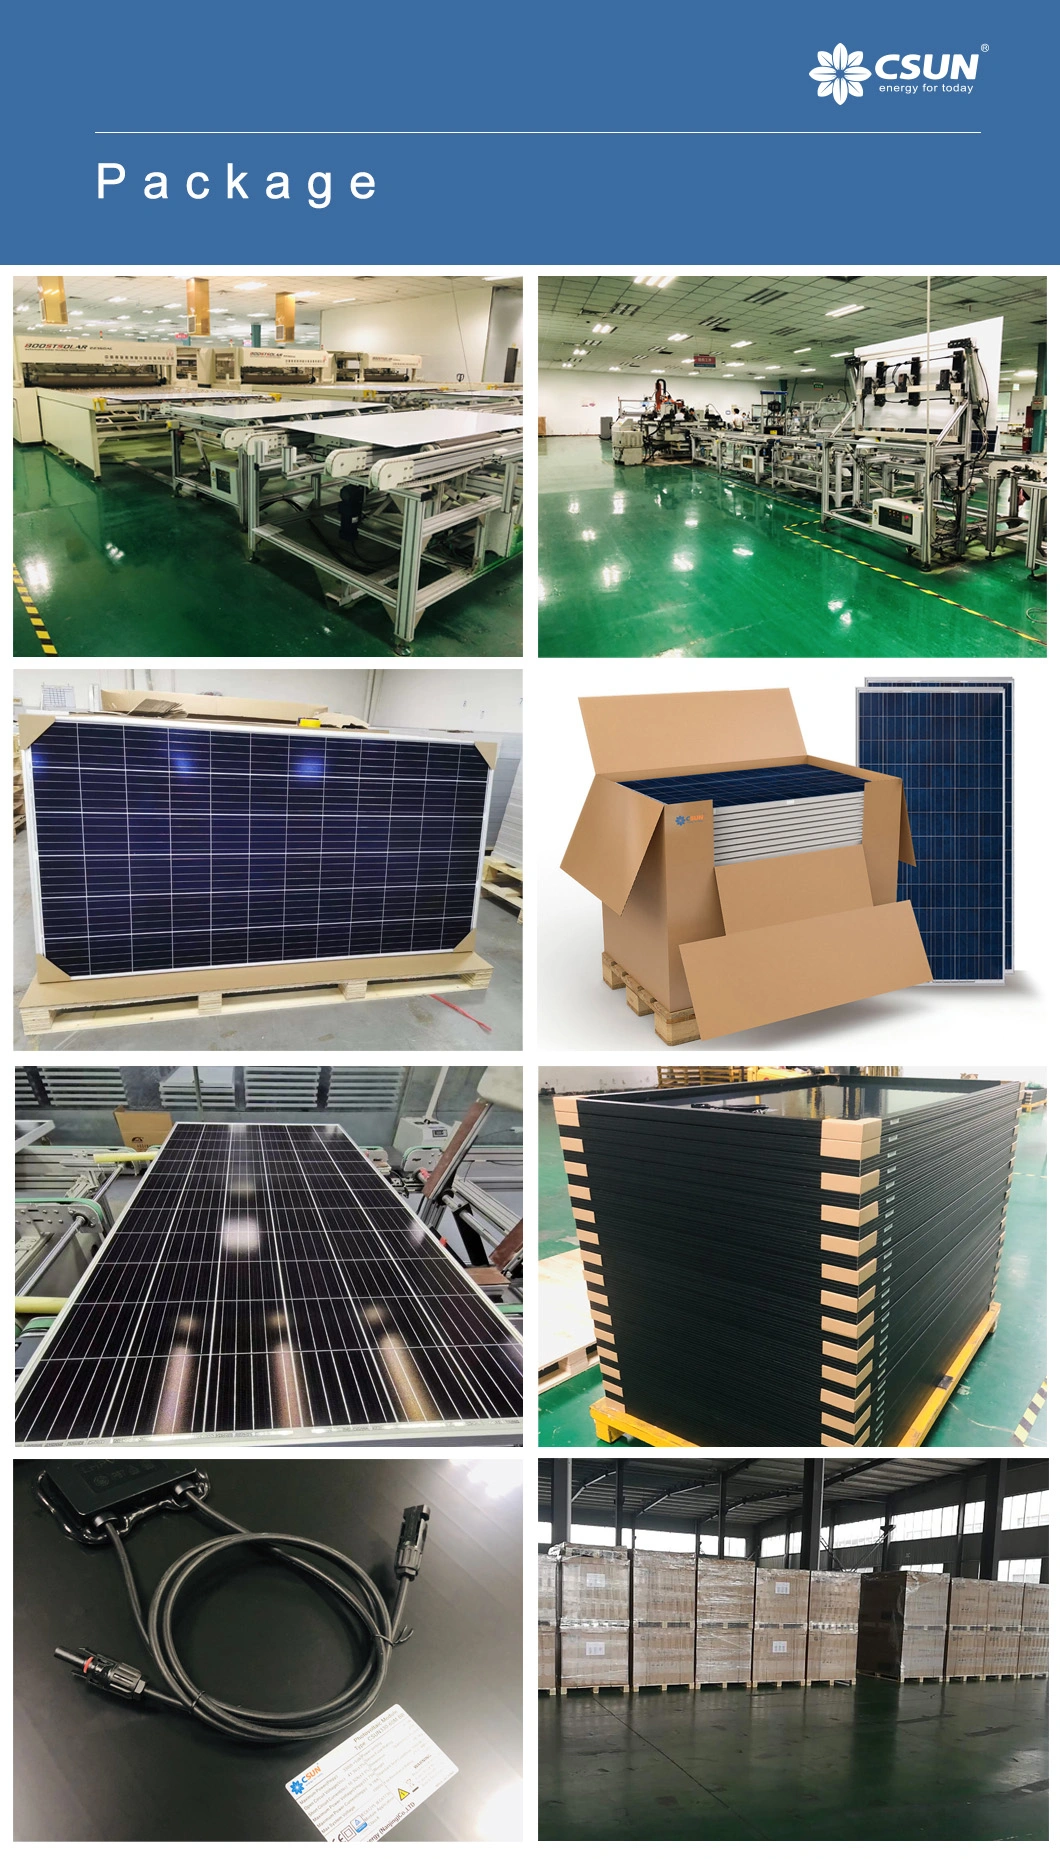 Top 10 China Supplier 410W PV Mono Solar Panel